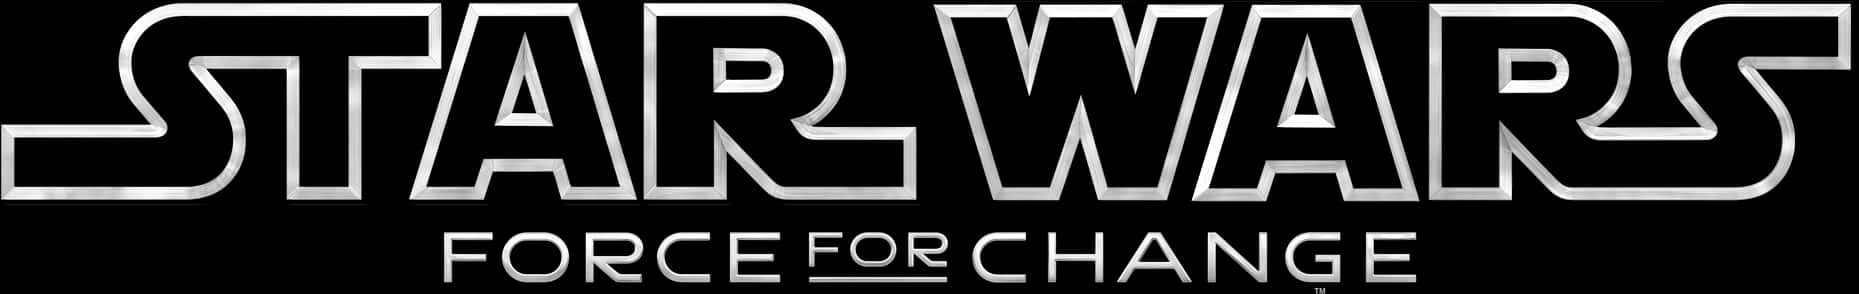 Star Wars Force For Change Logo PNG